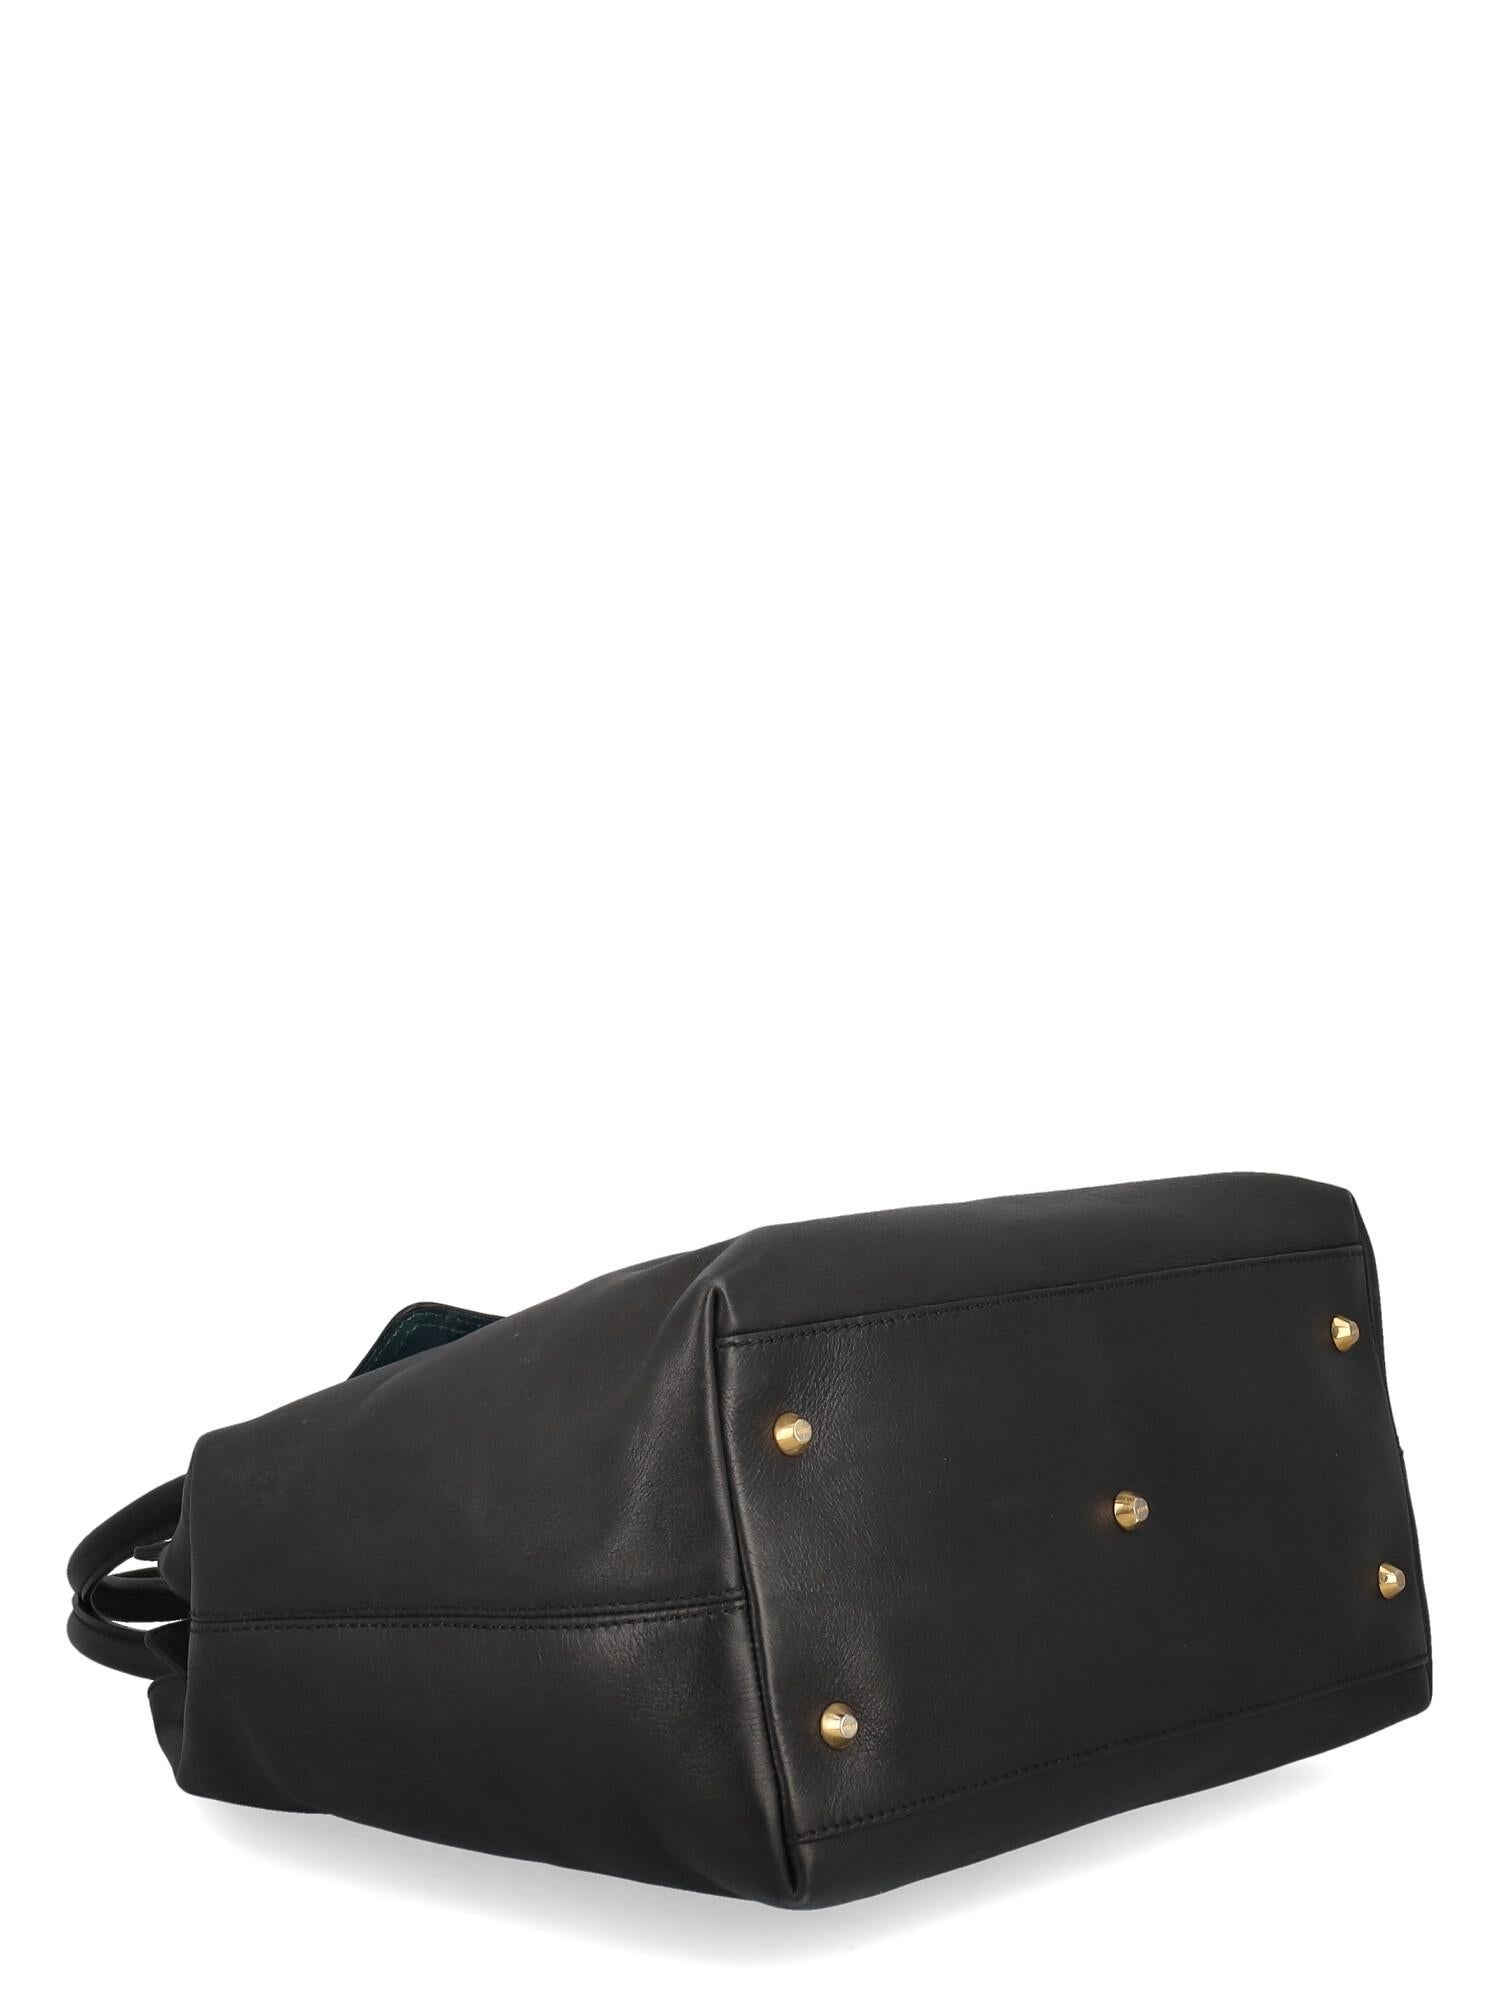 Emilio Pucci Women Handbags Black Leather  For Sale 1